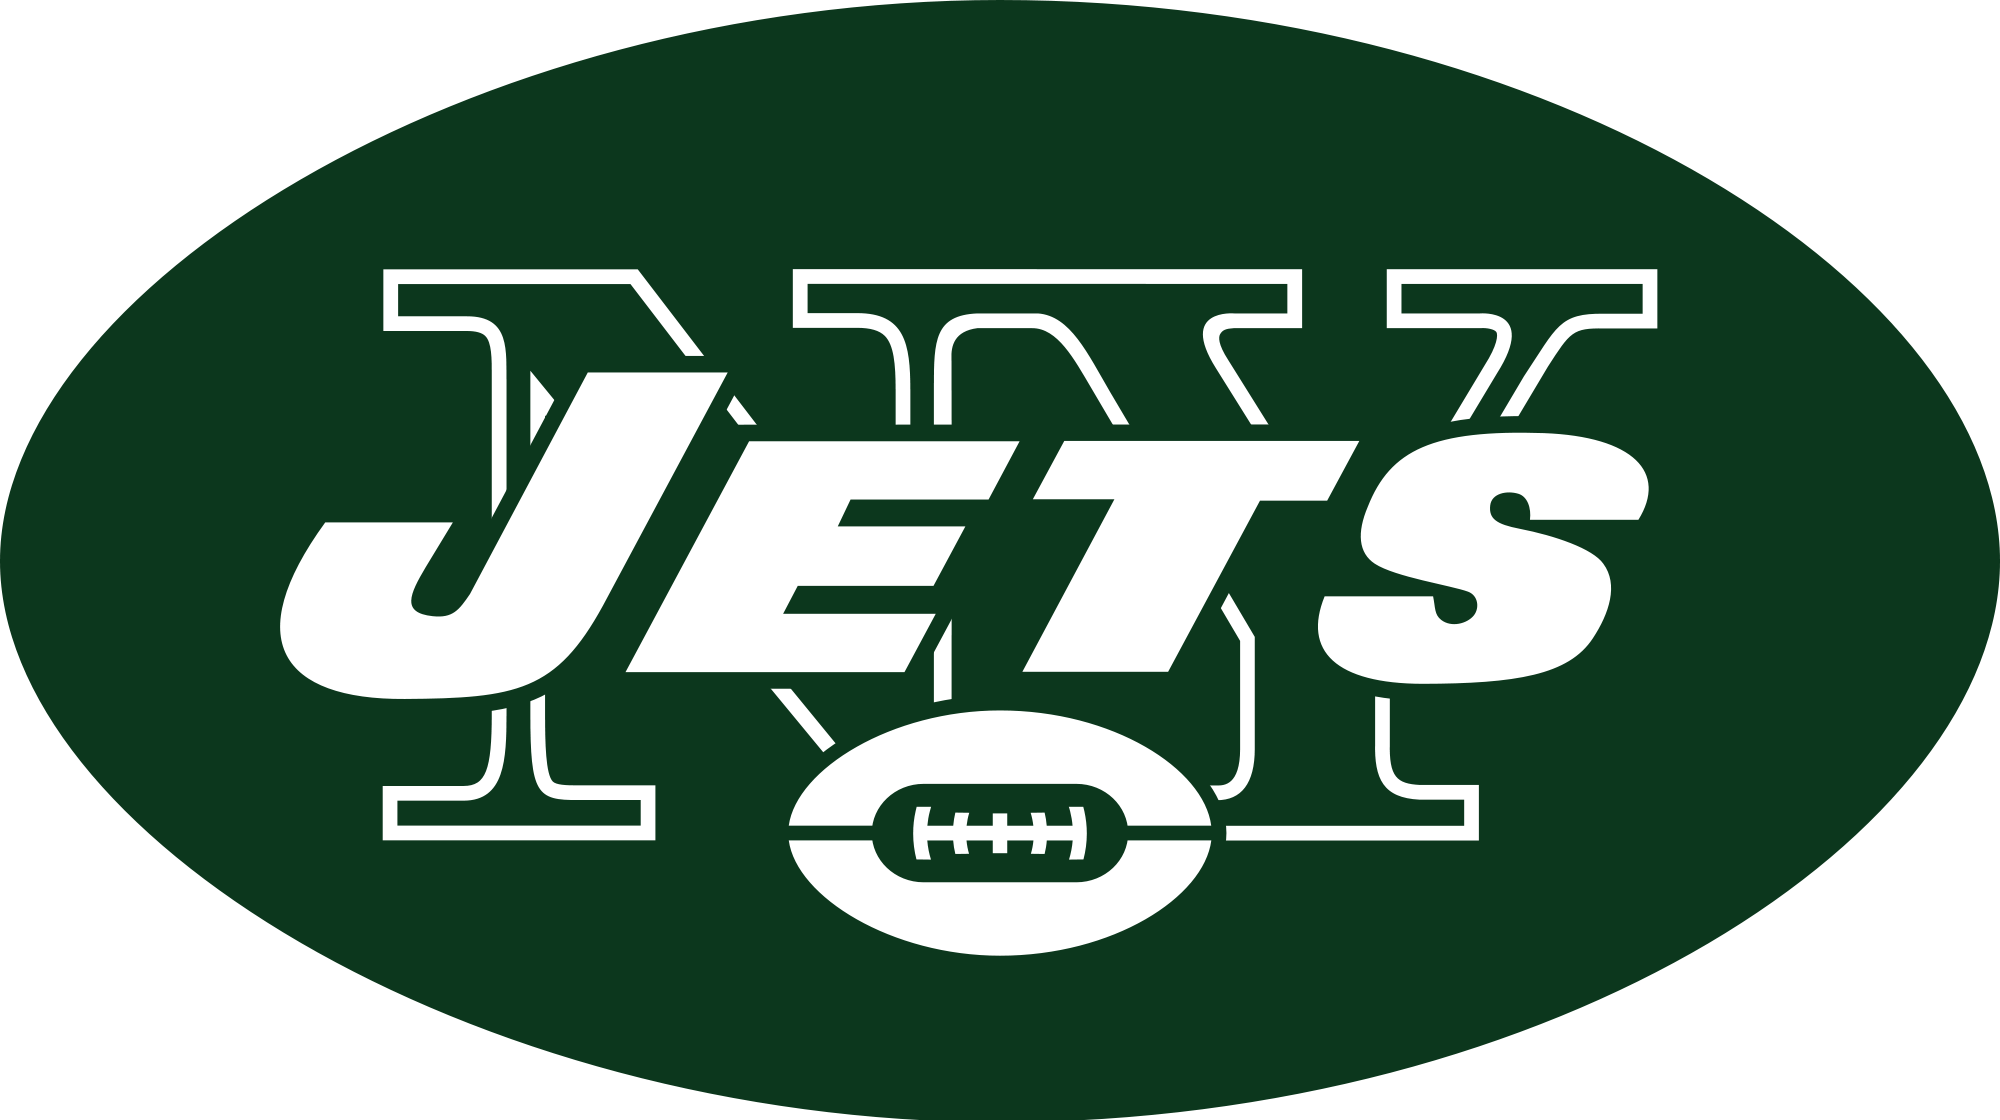 13  New York Jets   Via Revis Trade  